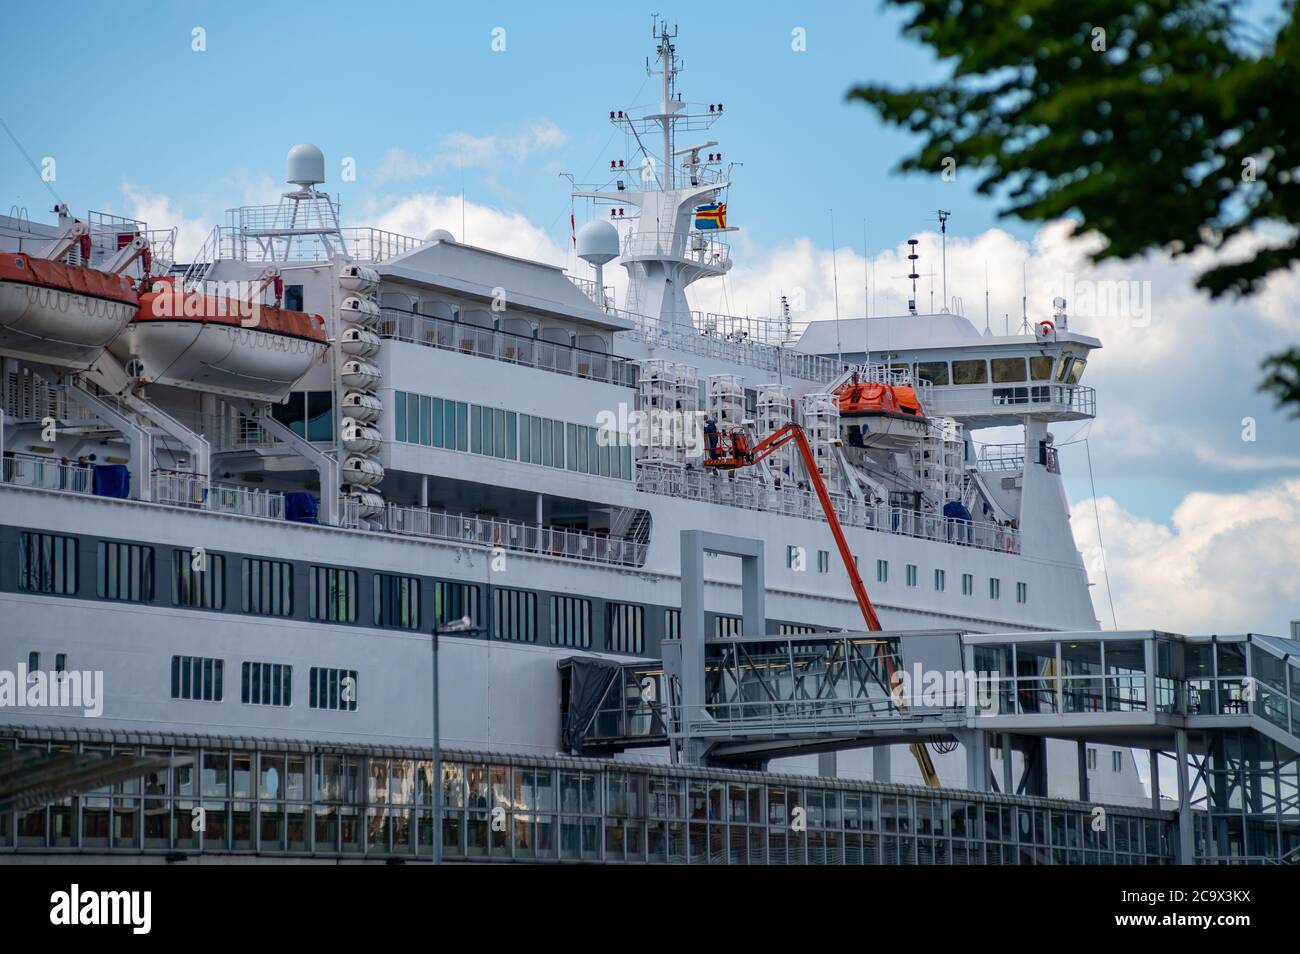 Helsinki / Finland - July 31, 2020: Closeup of a large passenger roro-ferry moored to passenger terminal. Stock Photo